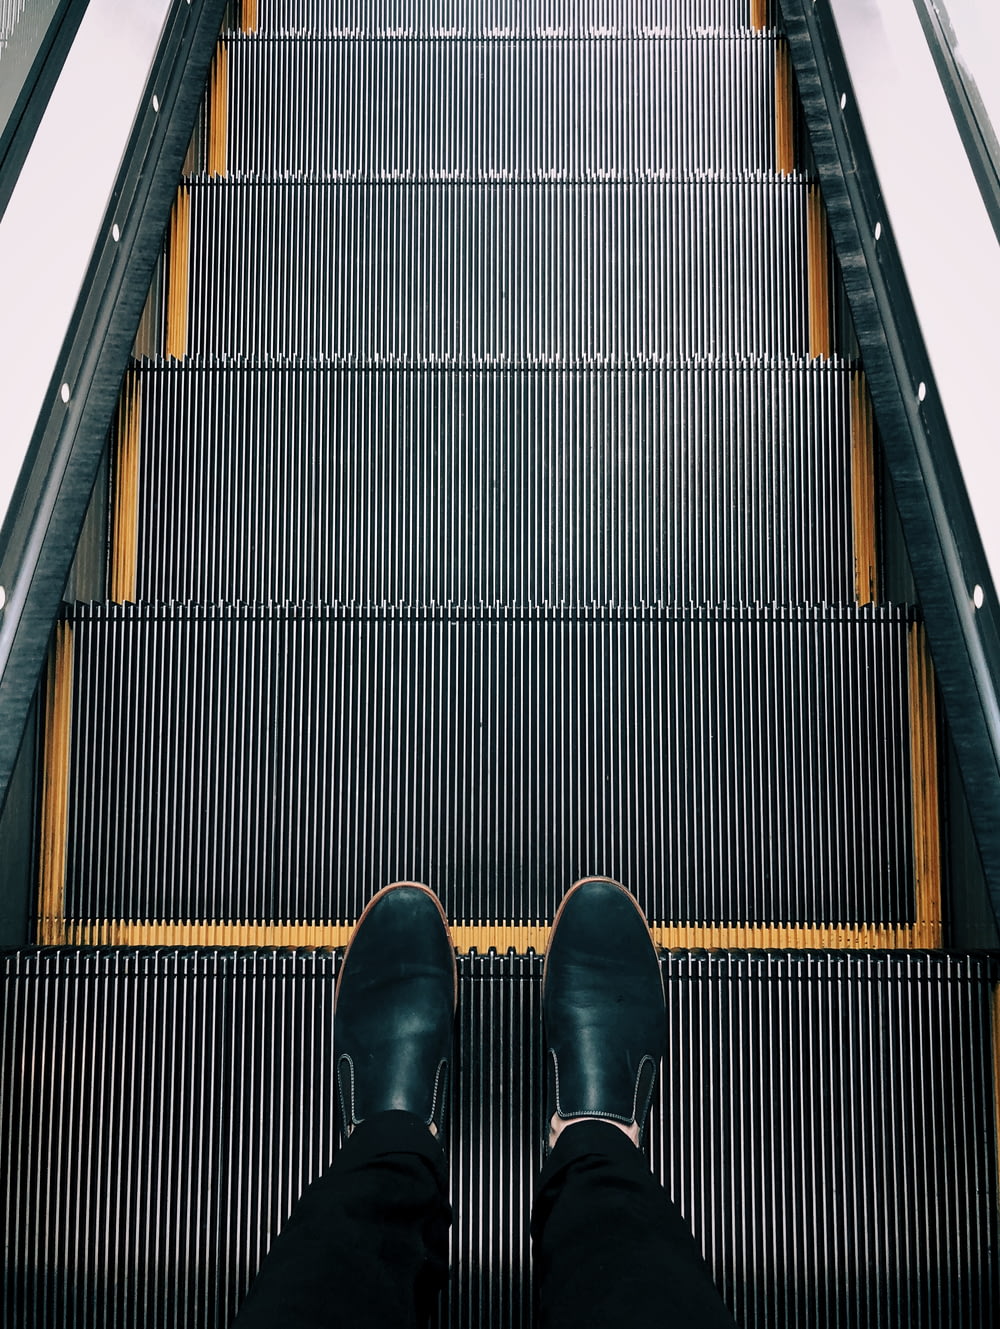 person standing on escalator